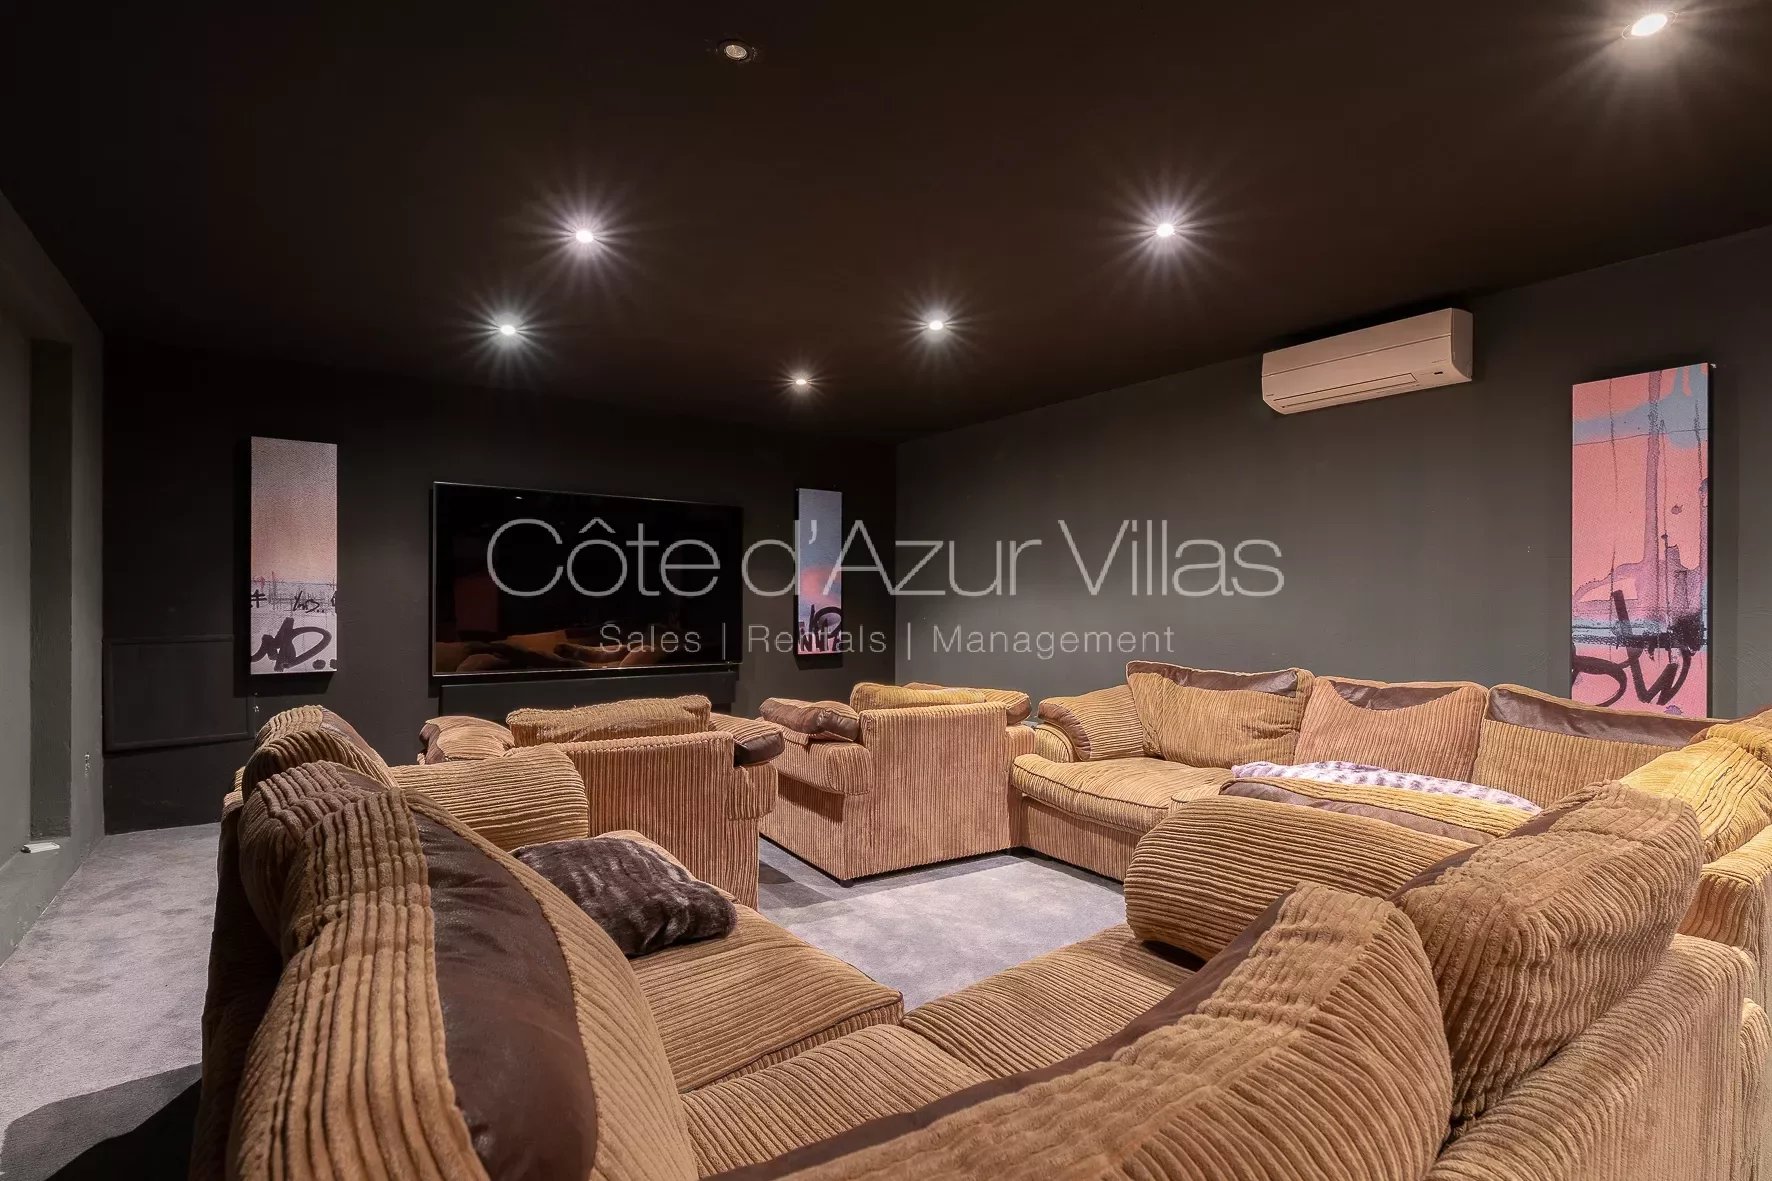 Tourrettes-sur-Loup - 600 m² Villa with 6 bedrooms in a quiet area